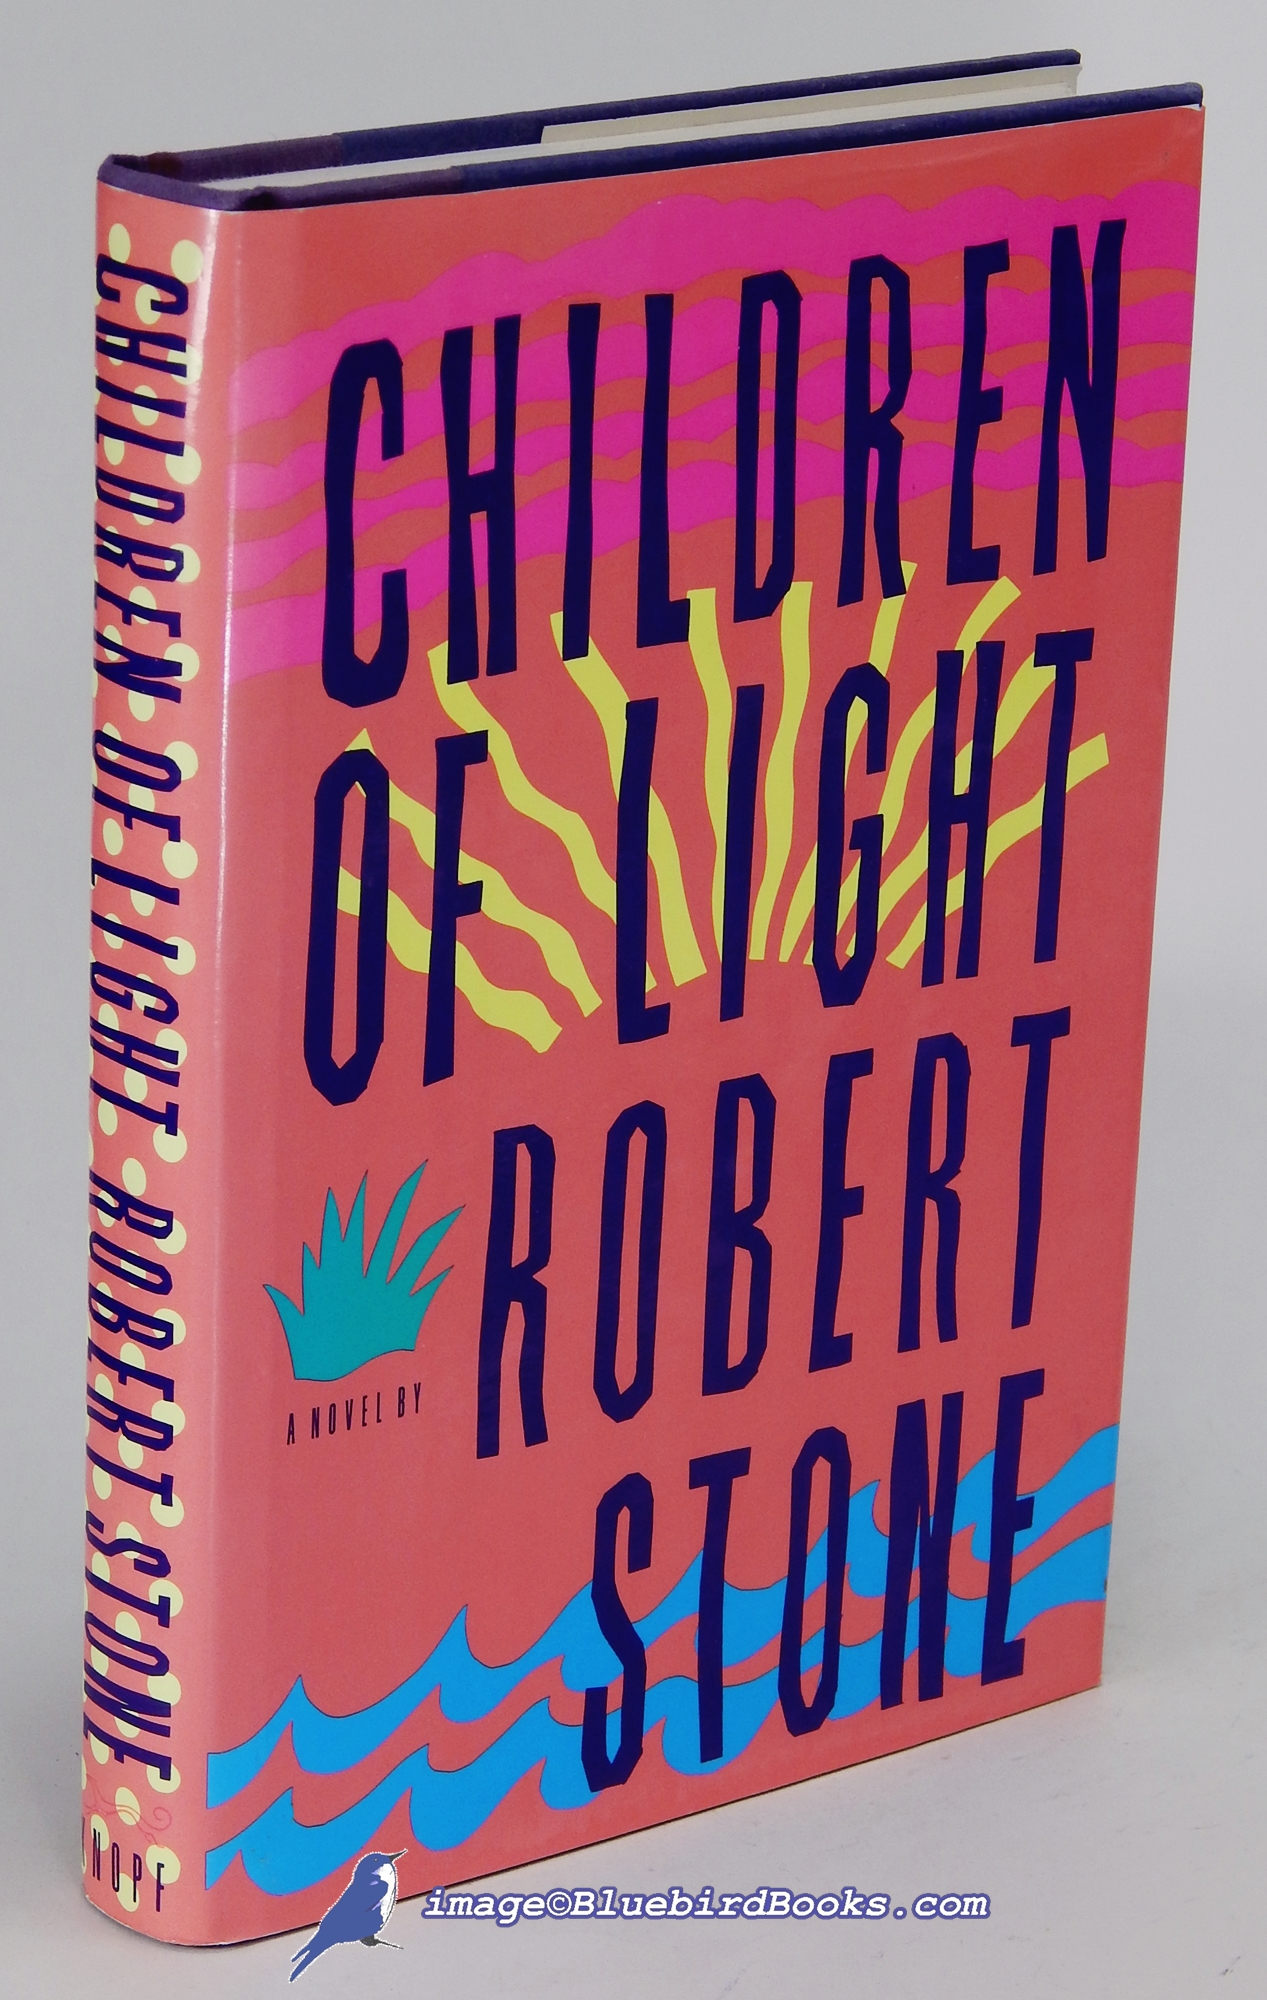 STONE, ROBERT - Children of Light